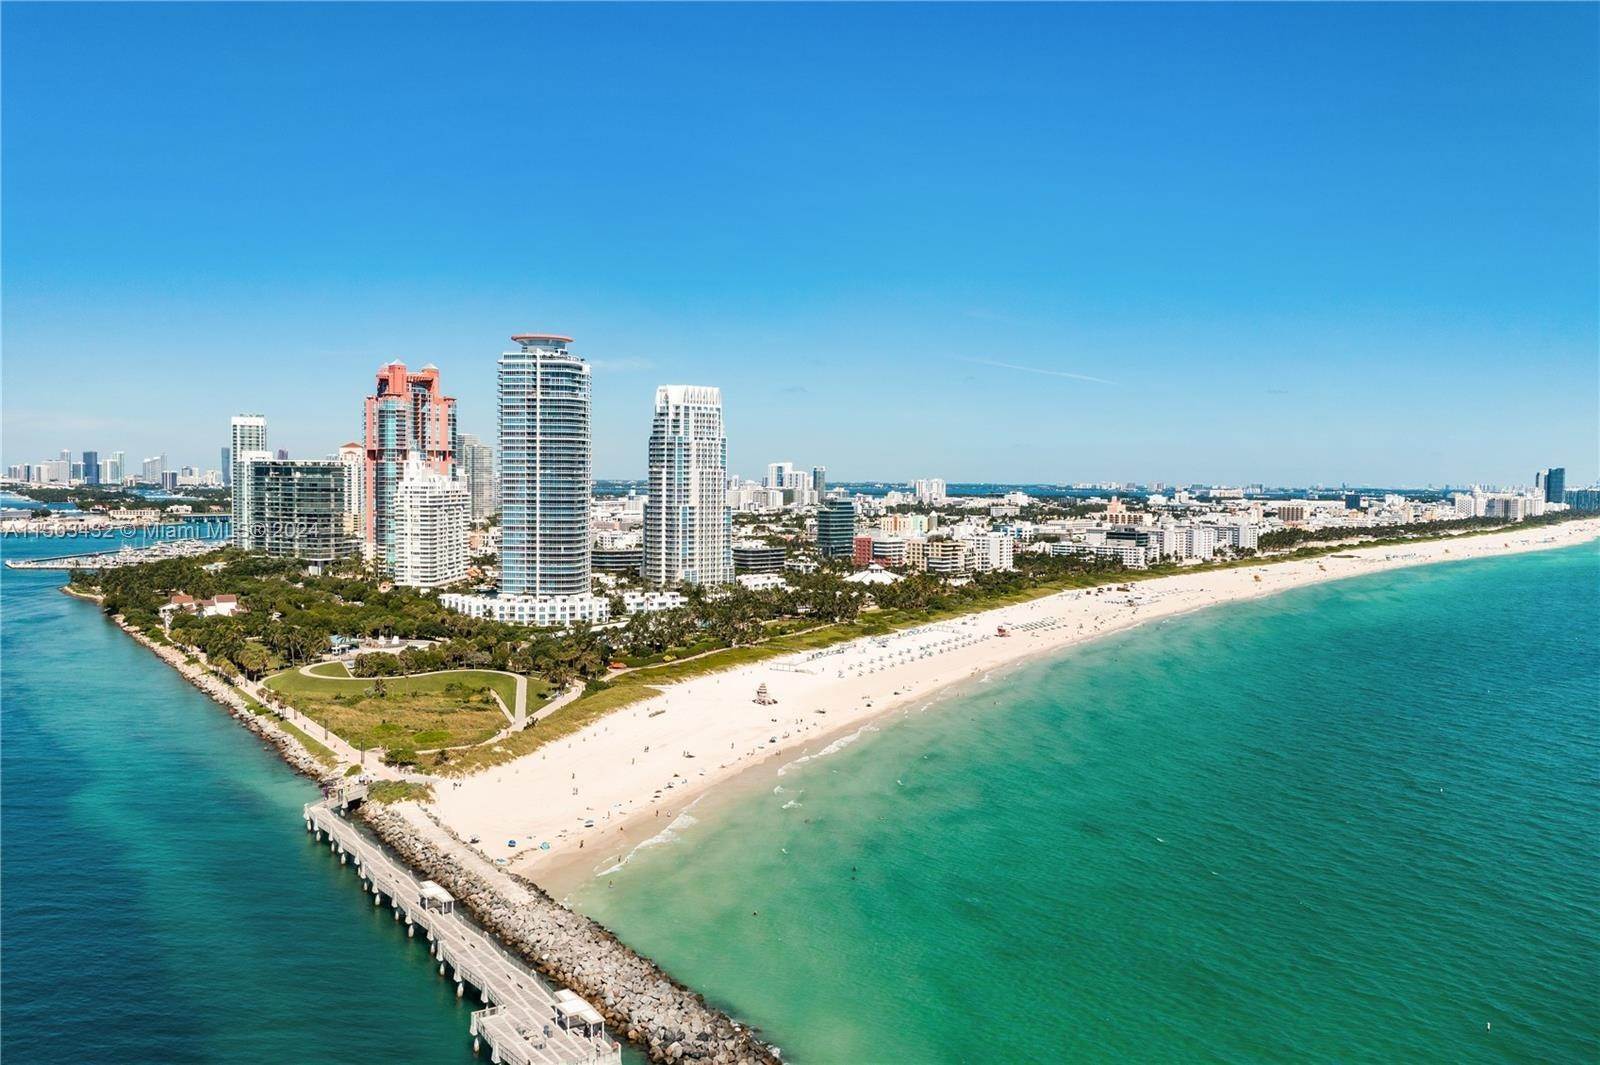 Condominium for Sale at South of Fifth, Miami Beach, FL 33139